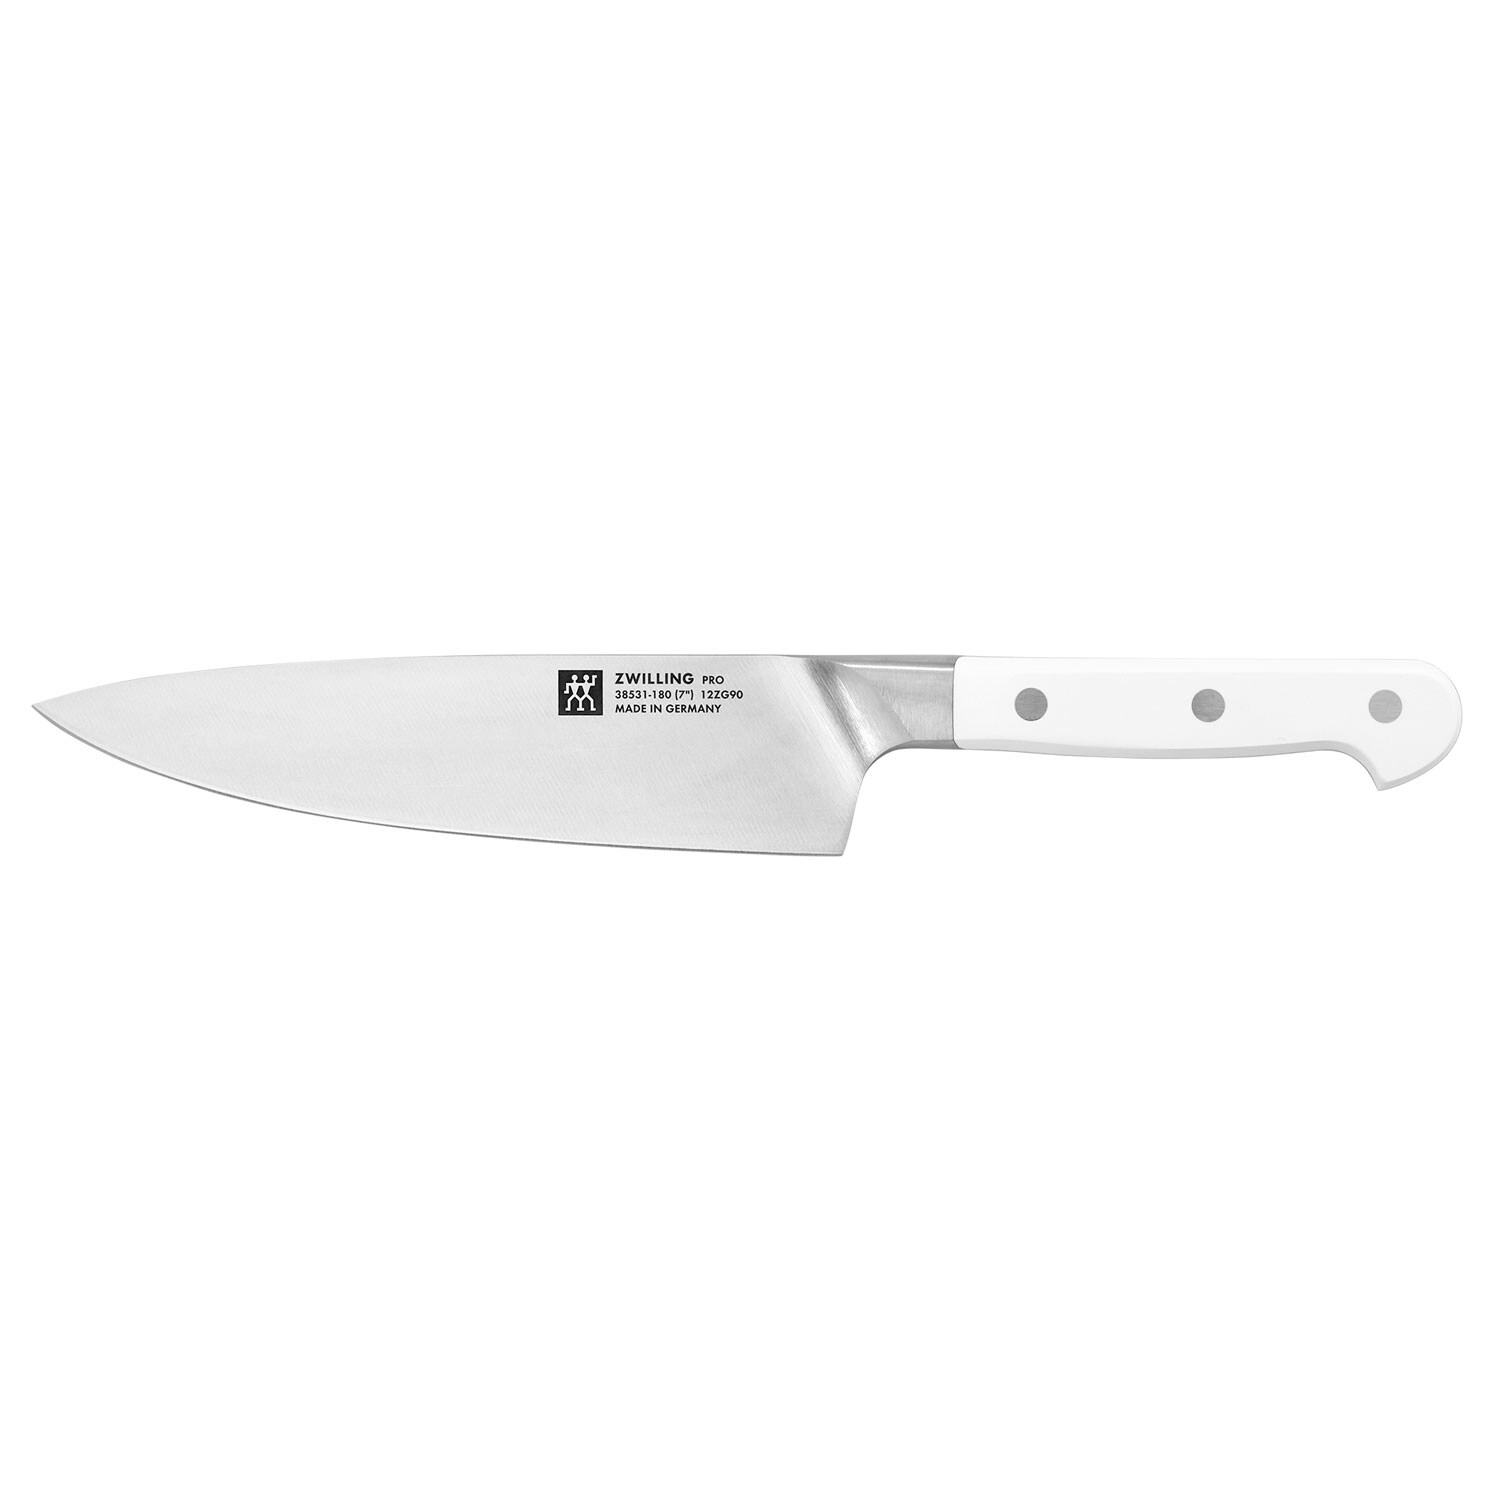 Zwilling Pro Le Blanc Kockkniv 18 Cm - Kockknivar Rostfritt Stål Vit